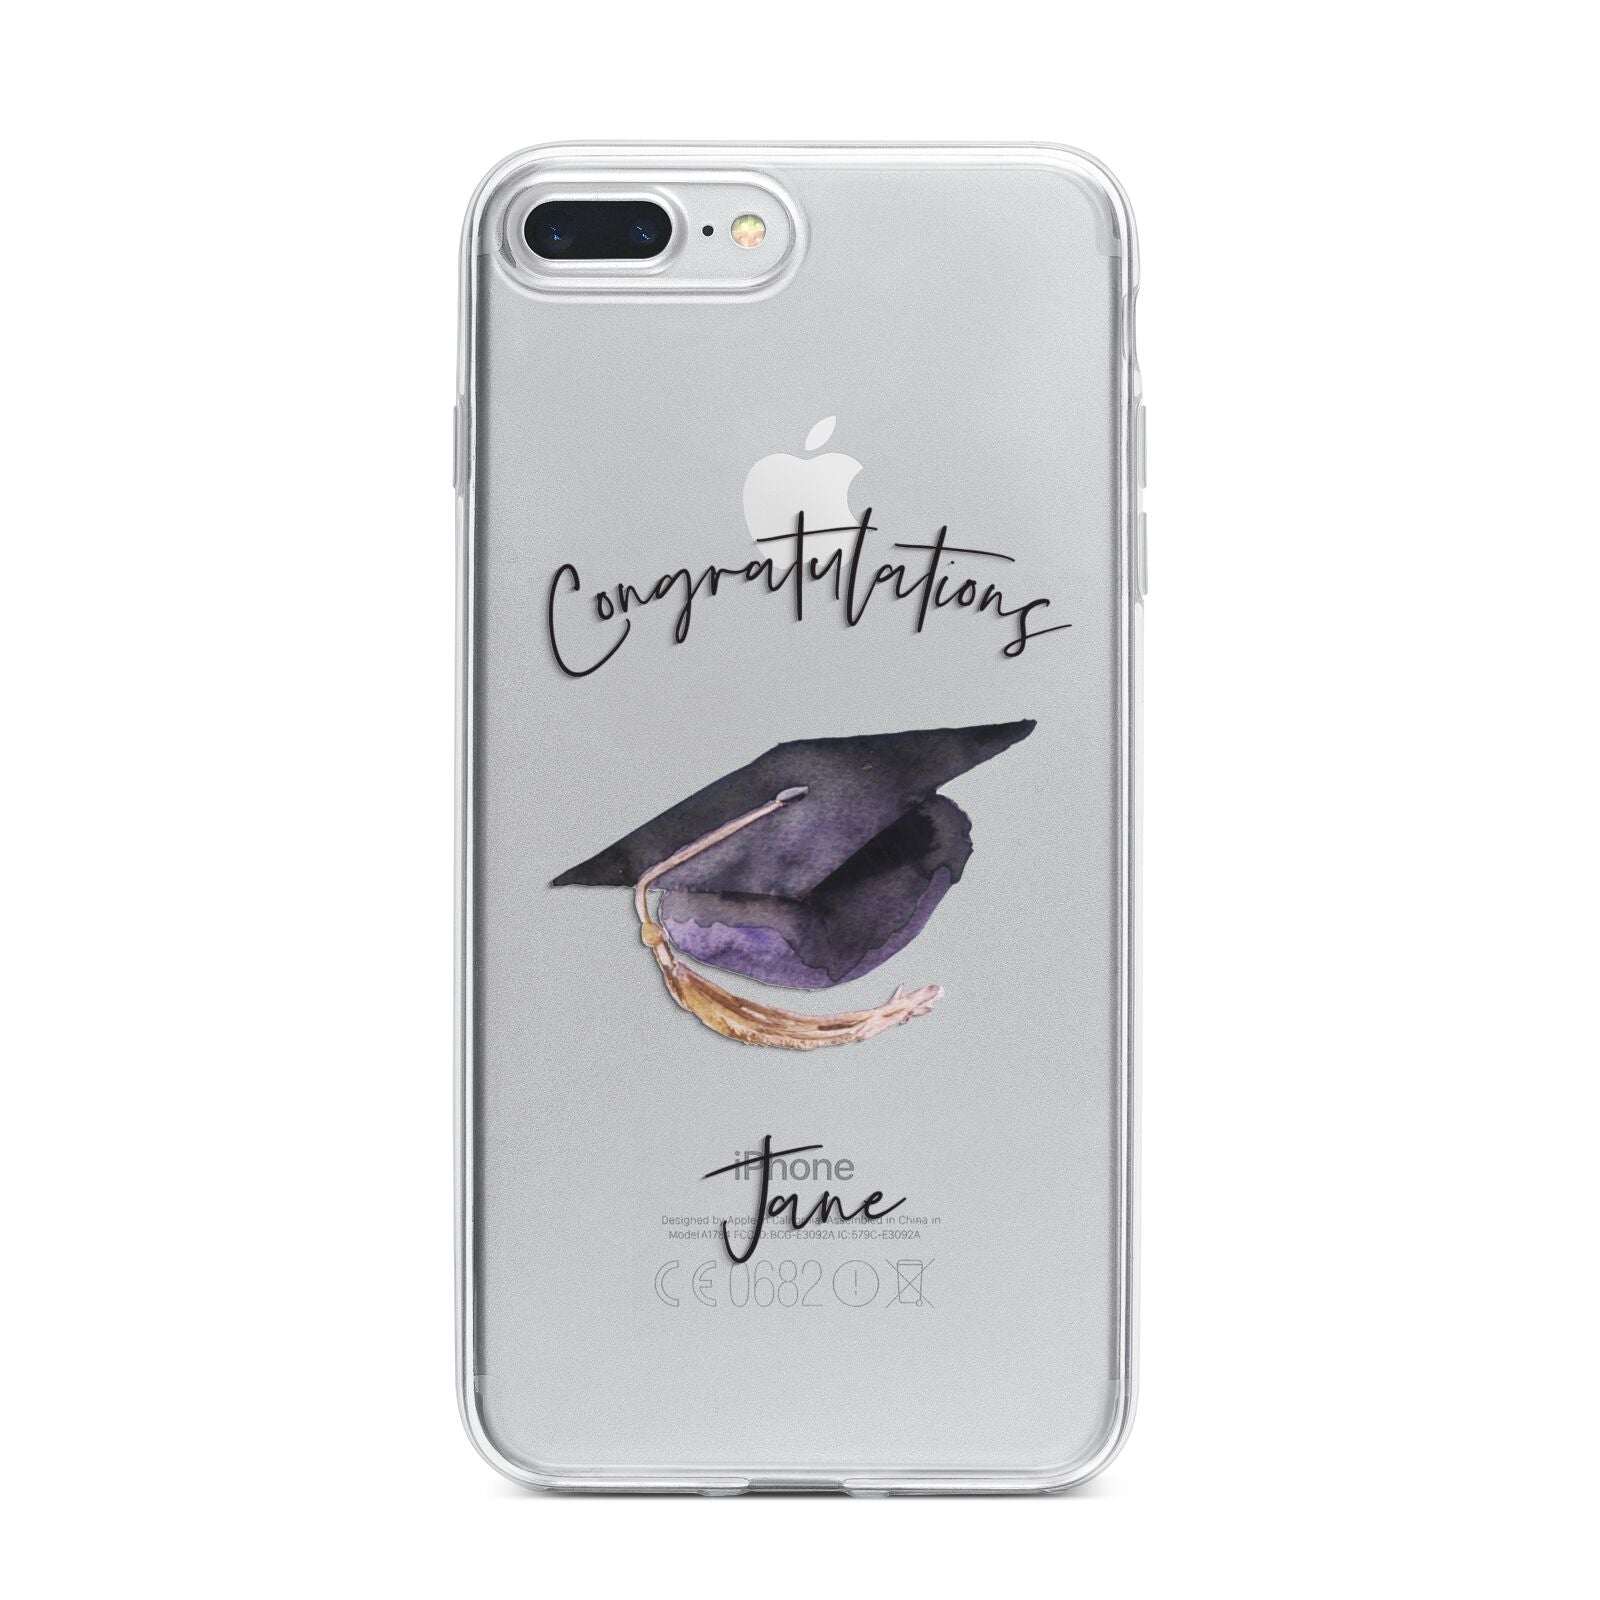 Congratulations Graduate Custom iPhone 7 Plus Bumper Case on Silver iPhone